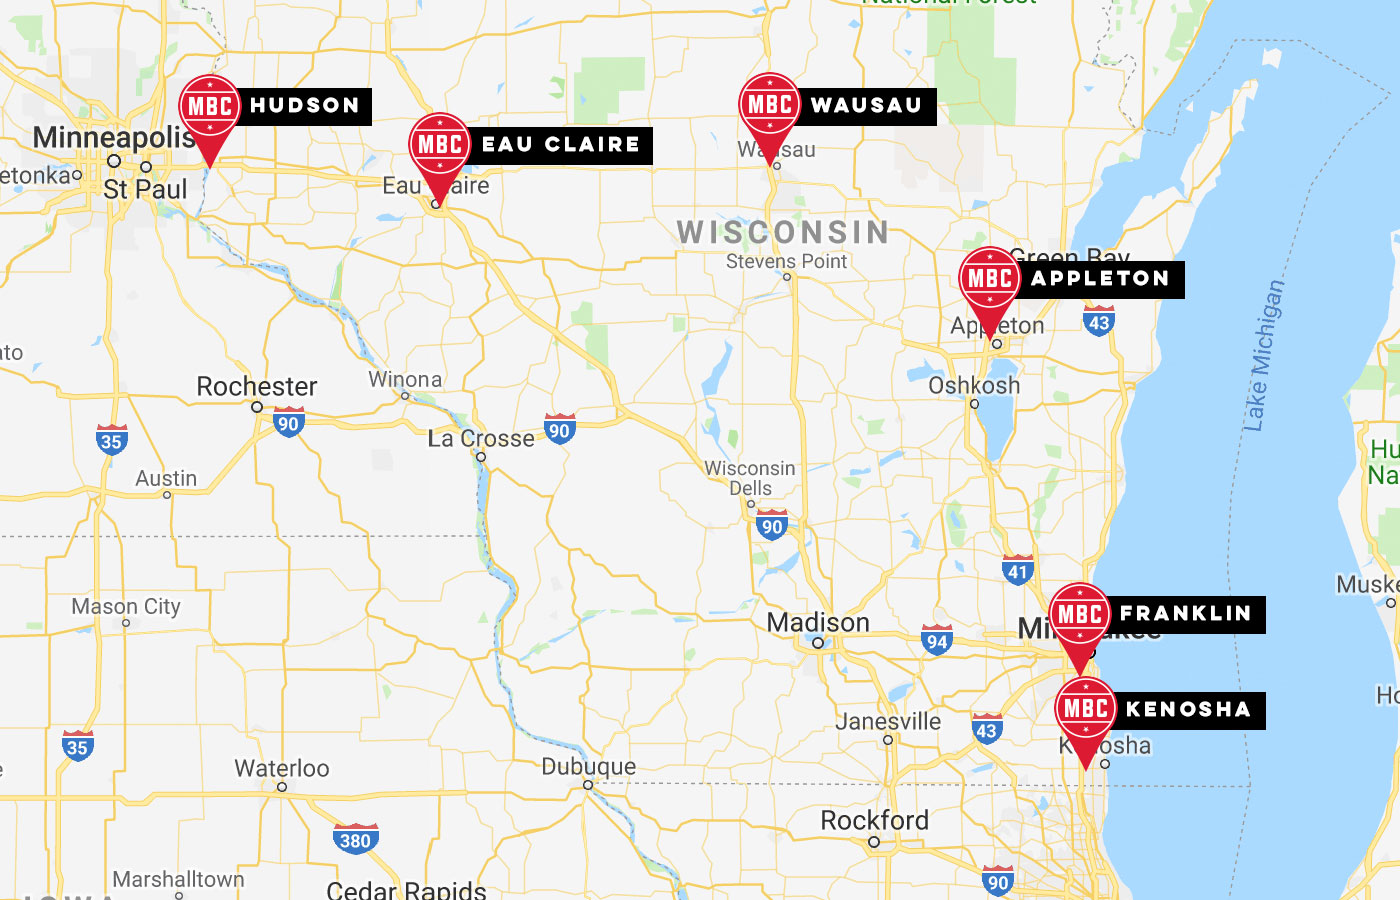 Milwaukee Burger Company Locations